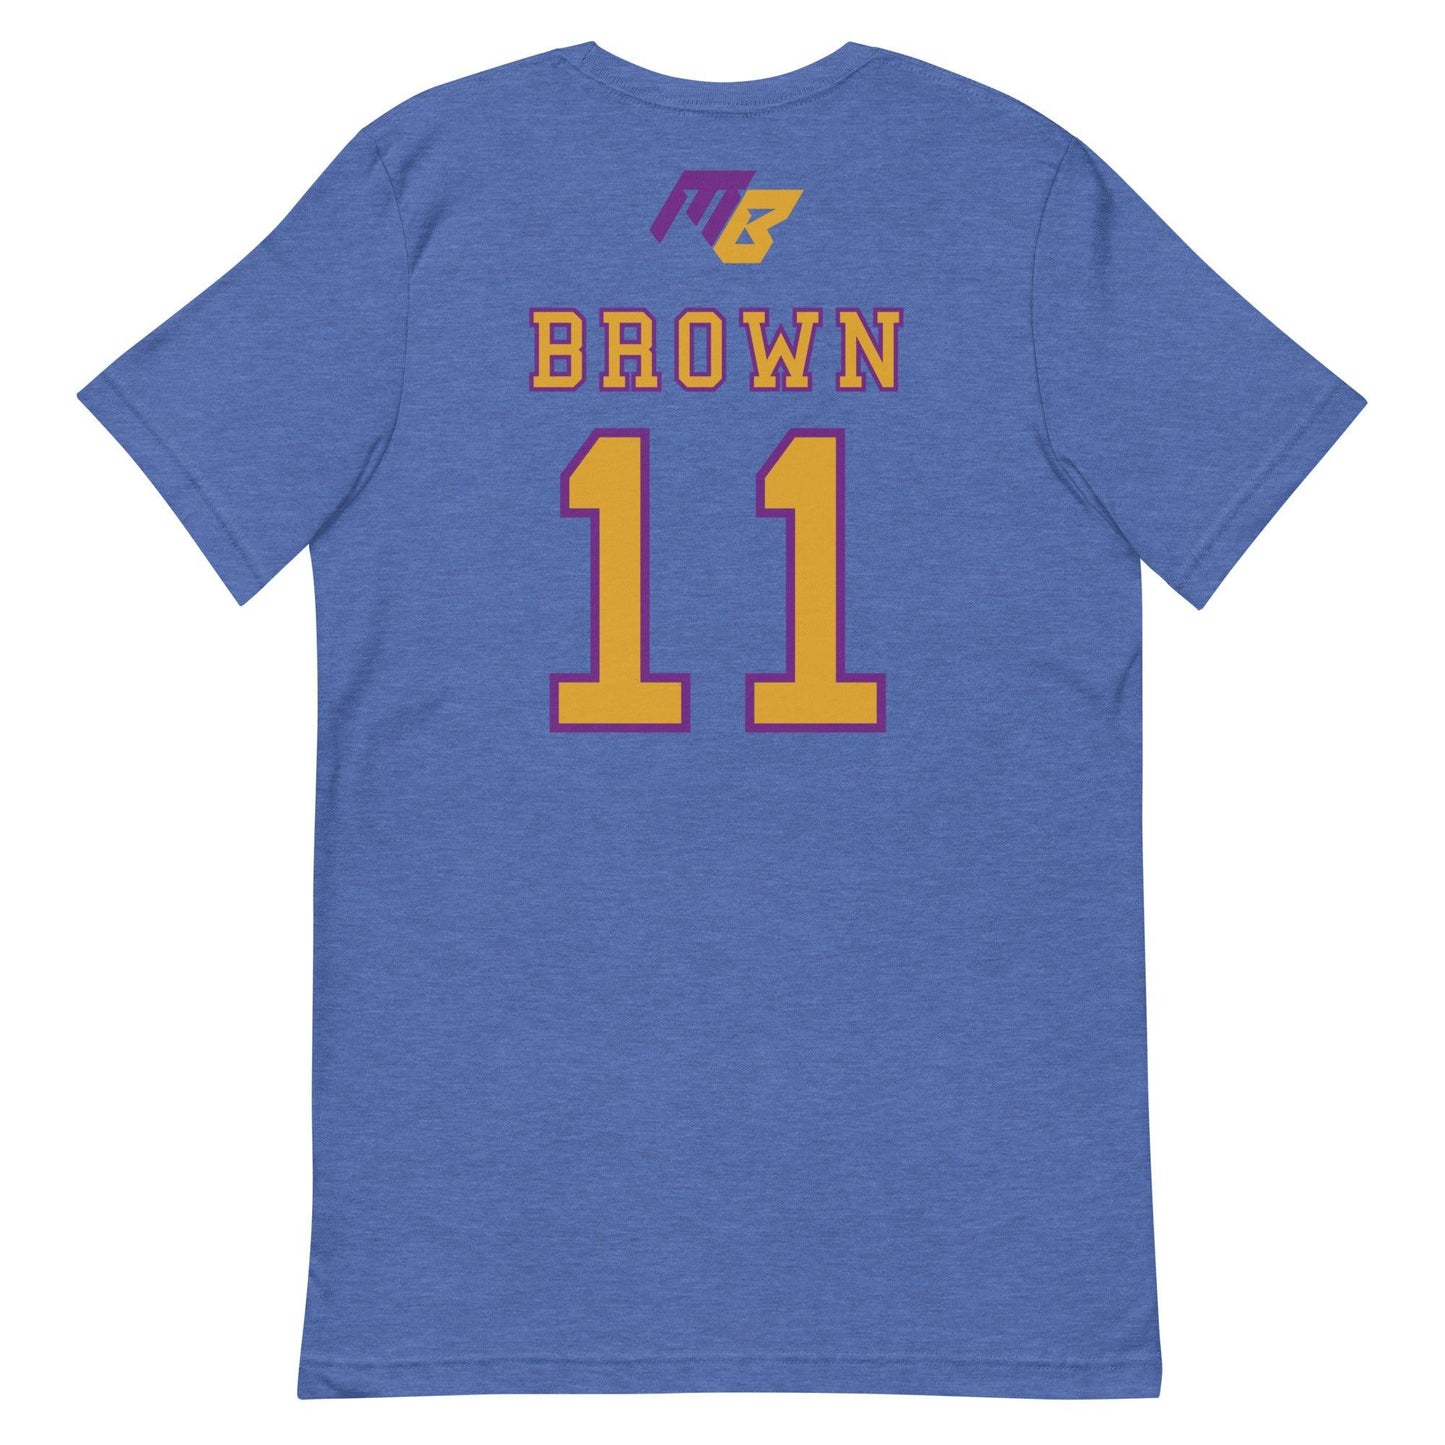 Malachi Brown "Jersey" t-shirt - Fan Arch